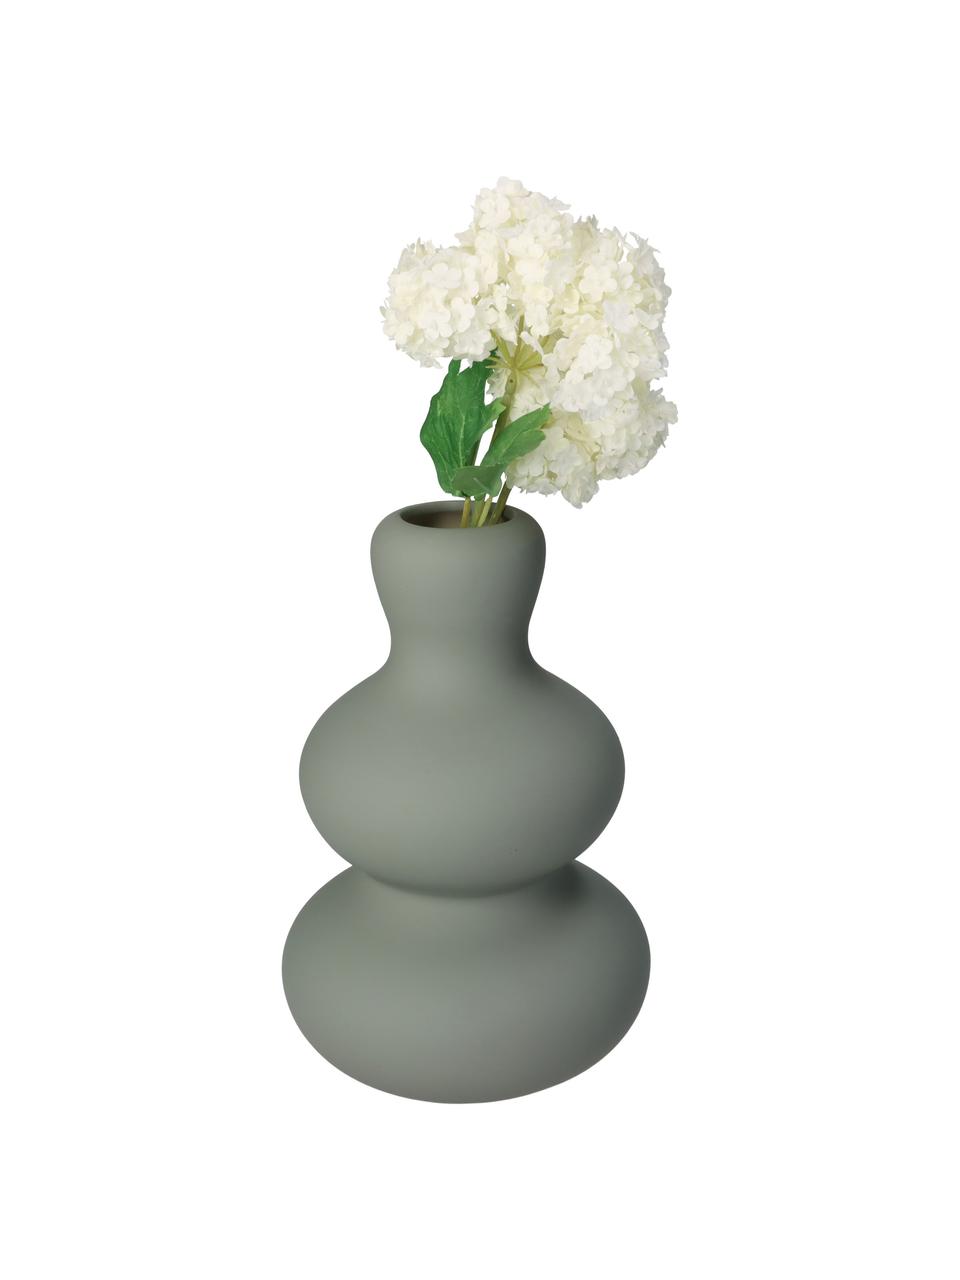 Vase Fine aus Steingut in Grün-Grau, Steingut, Grün-Grau, Ø 14 x H 20 cm